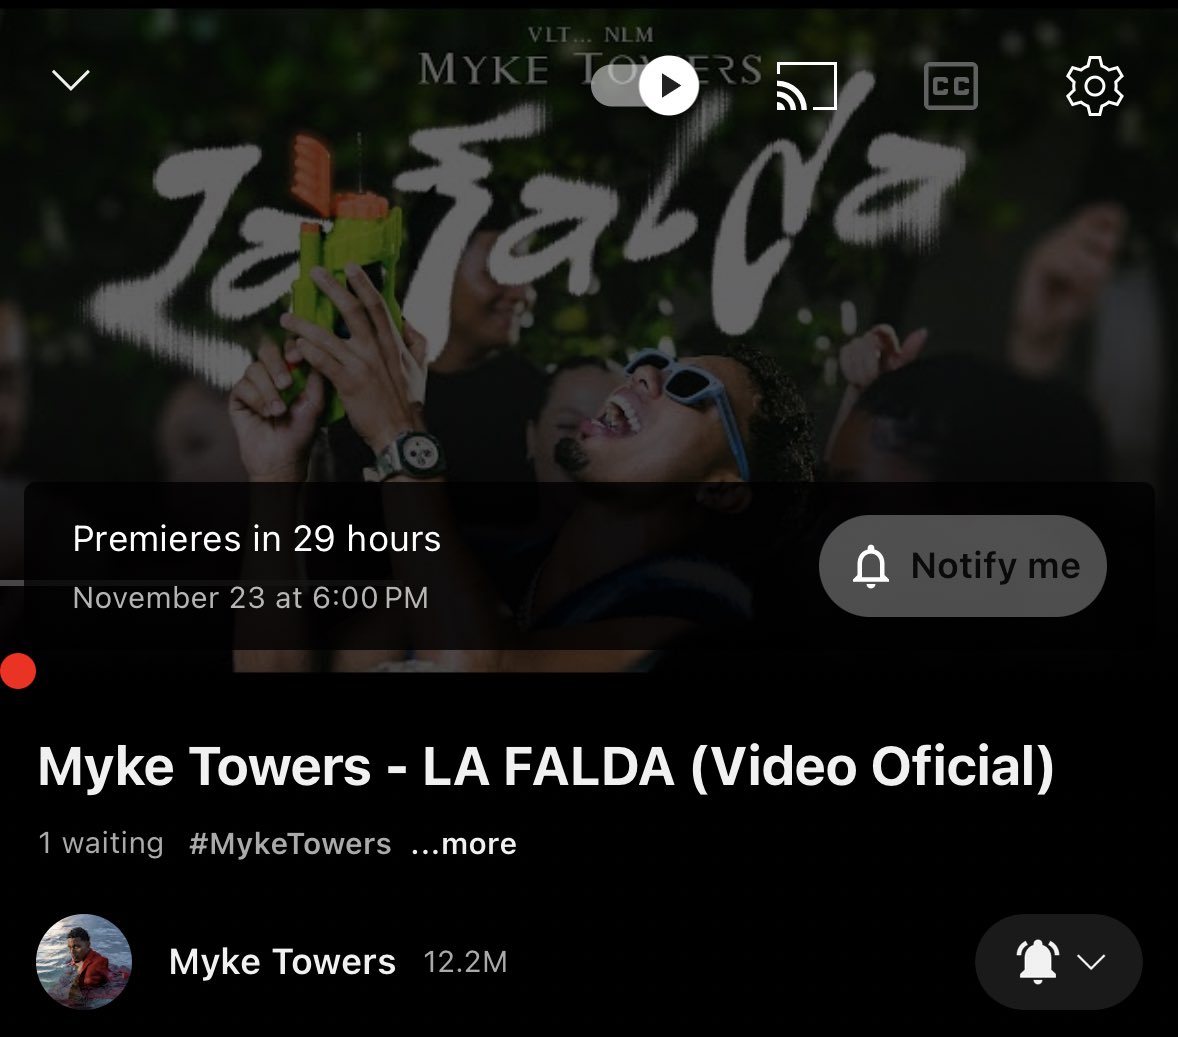 Myke Towers - LA FALDA